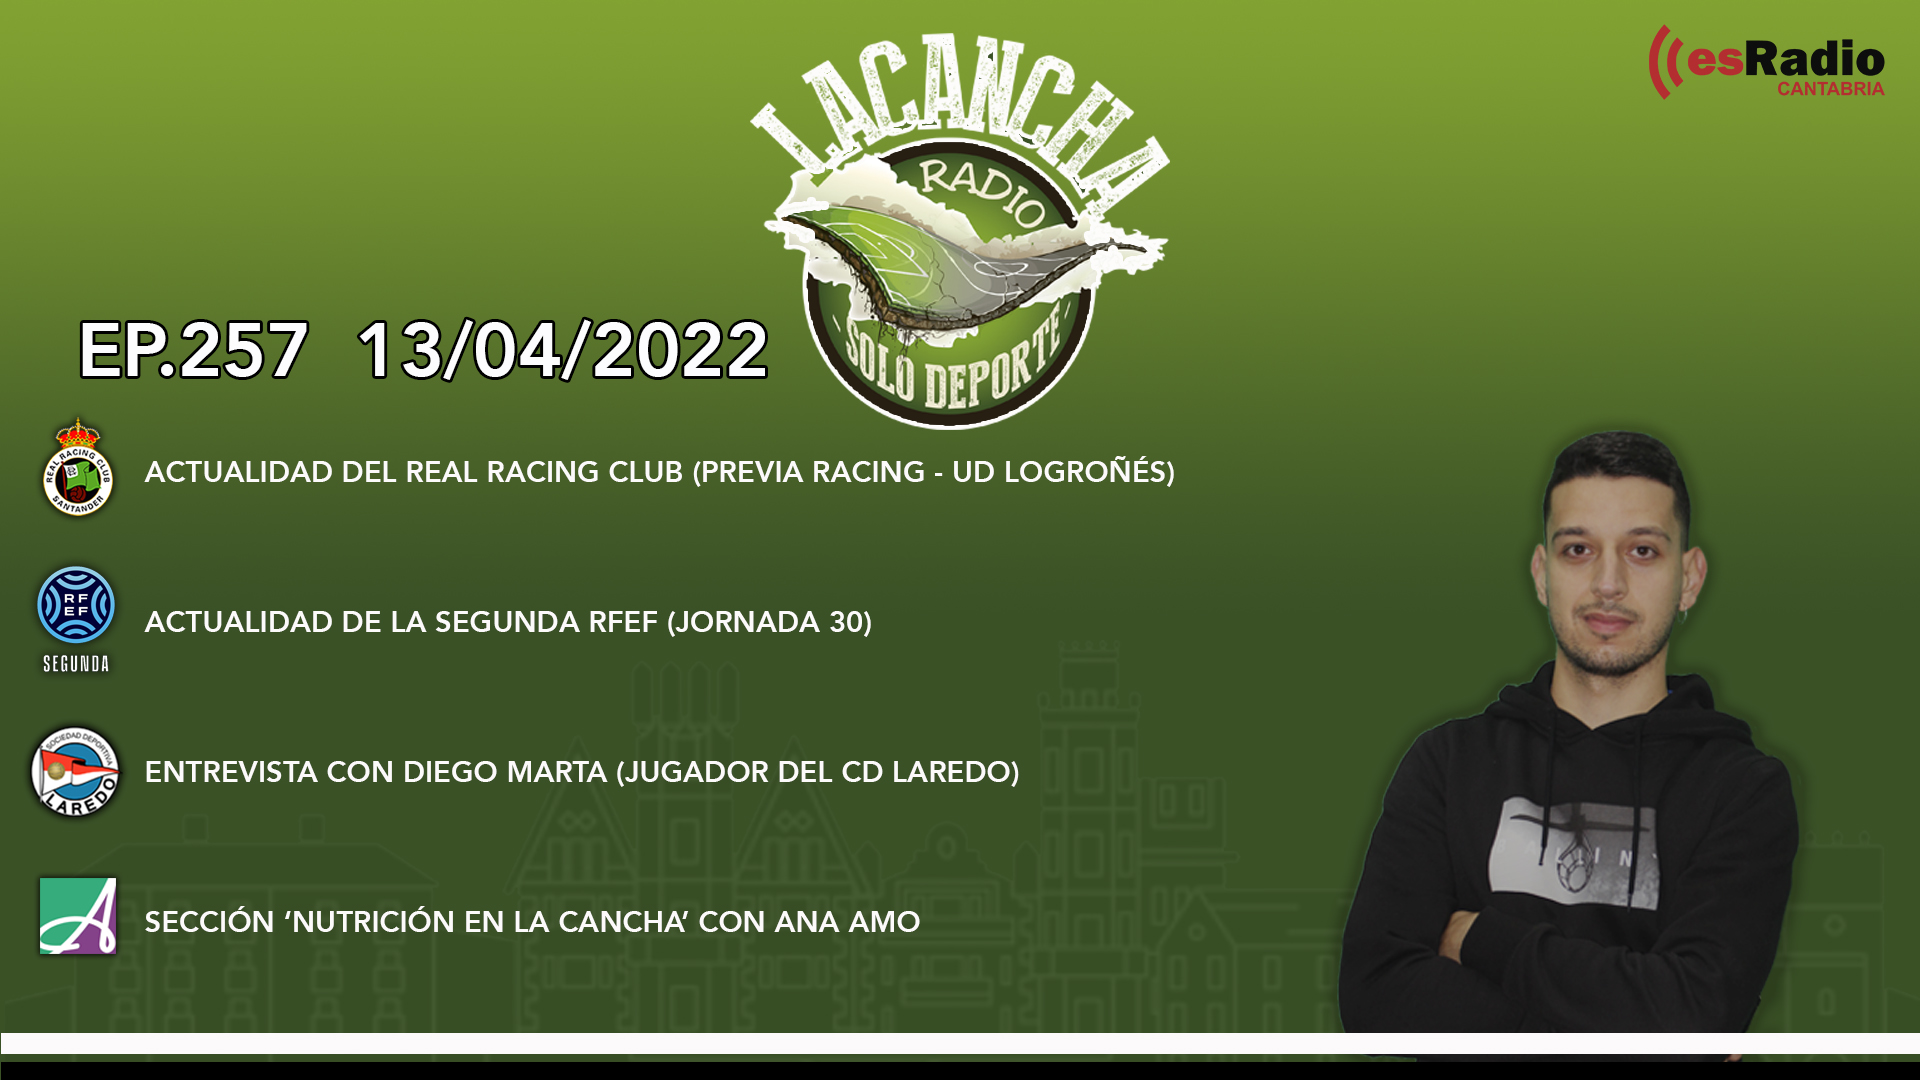 La Cancha Ep. 257 (13/04/2022)